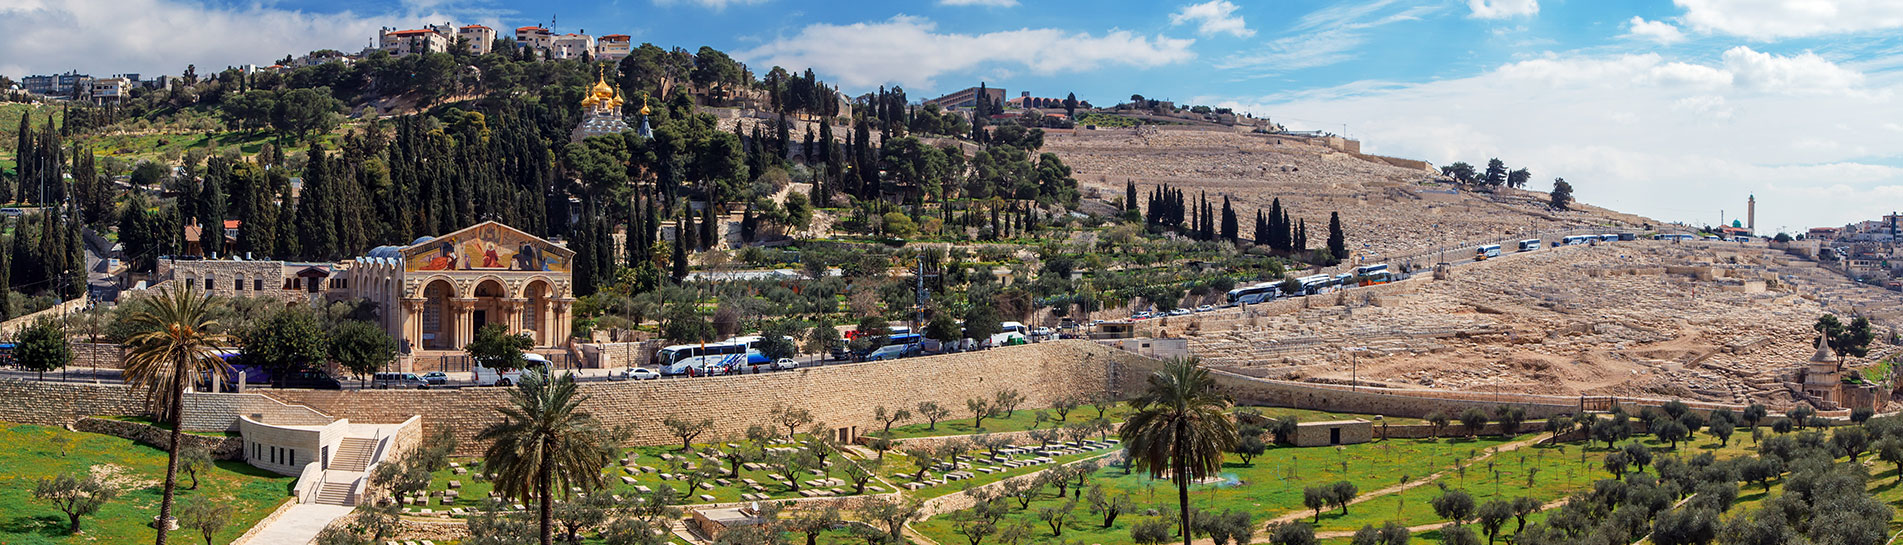 Mount of Olives: The mountain range in Jerusalem